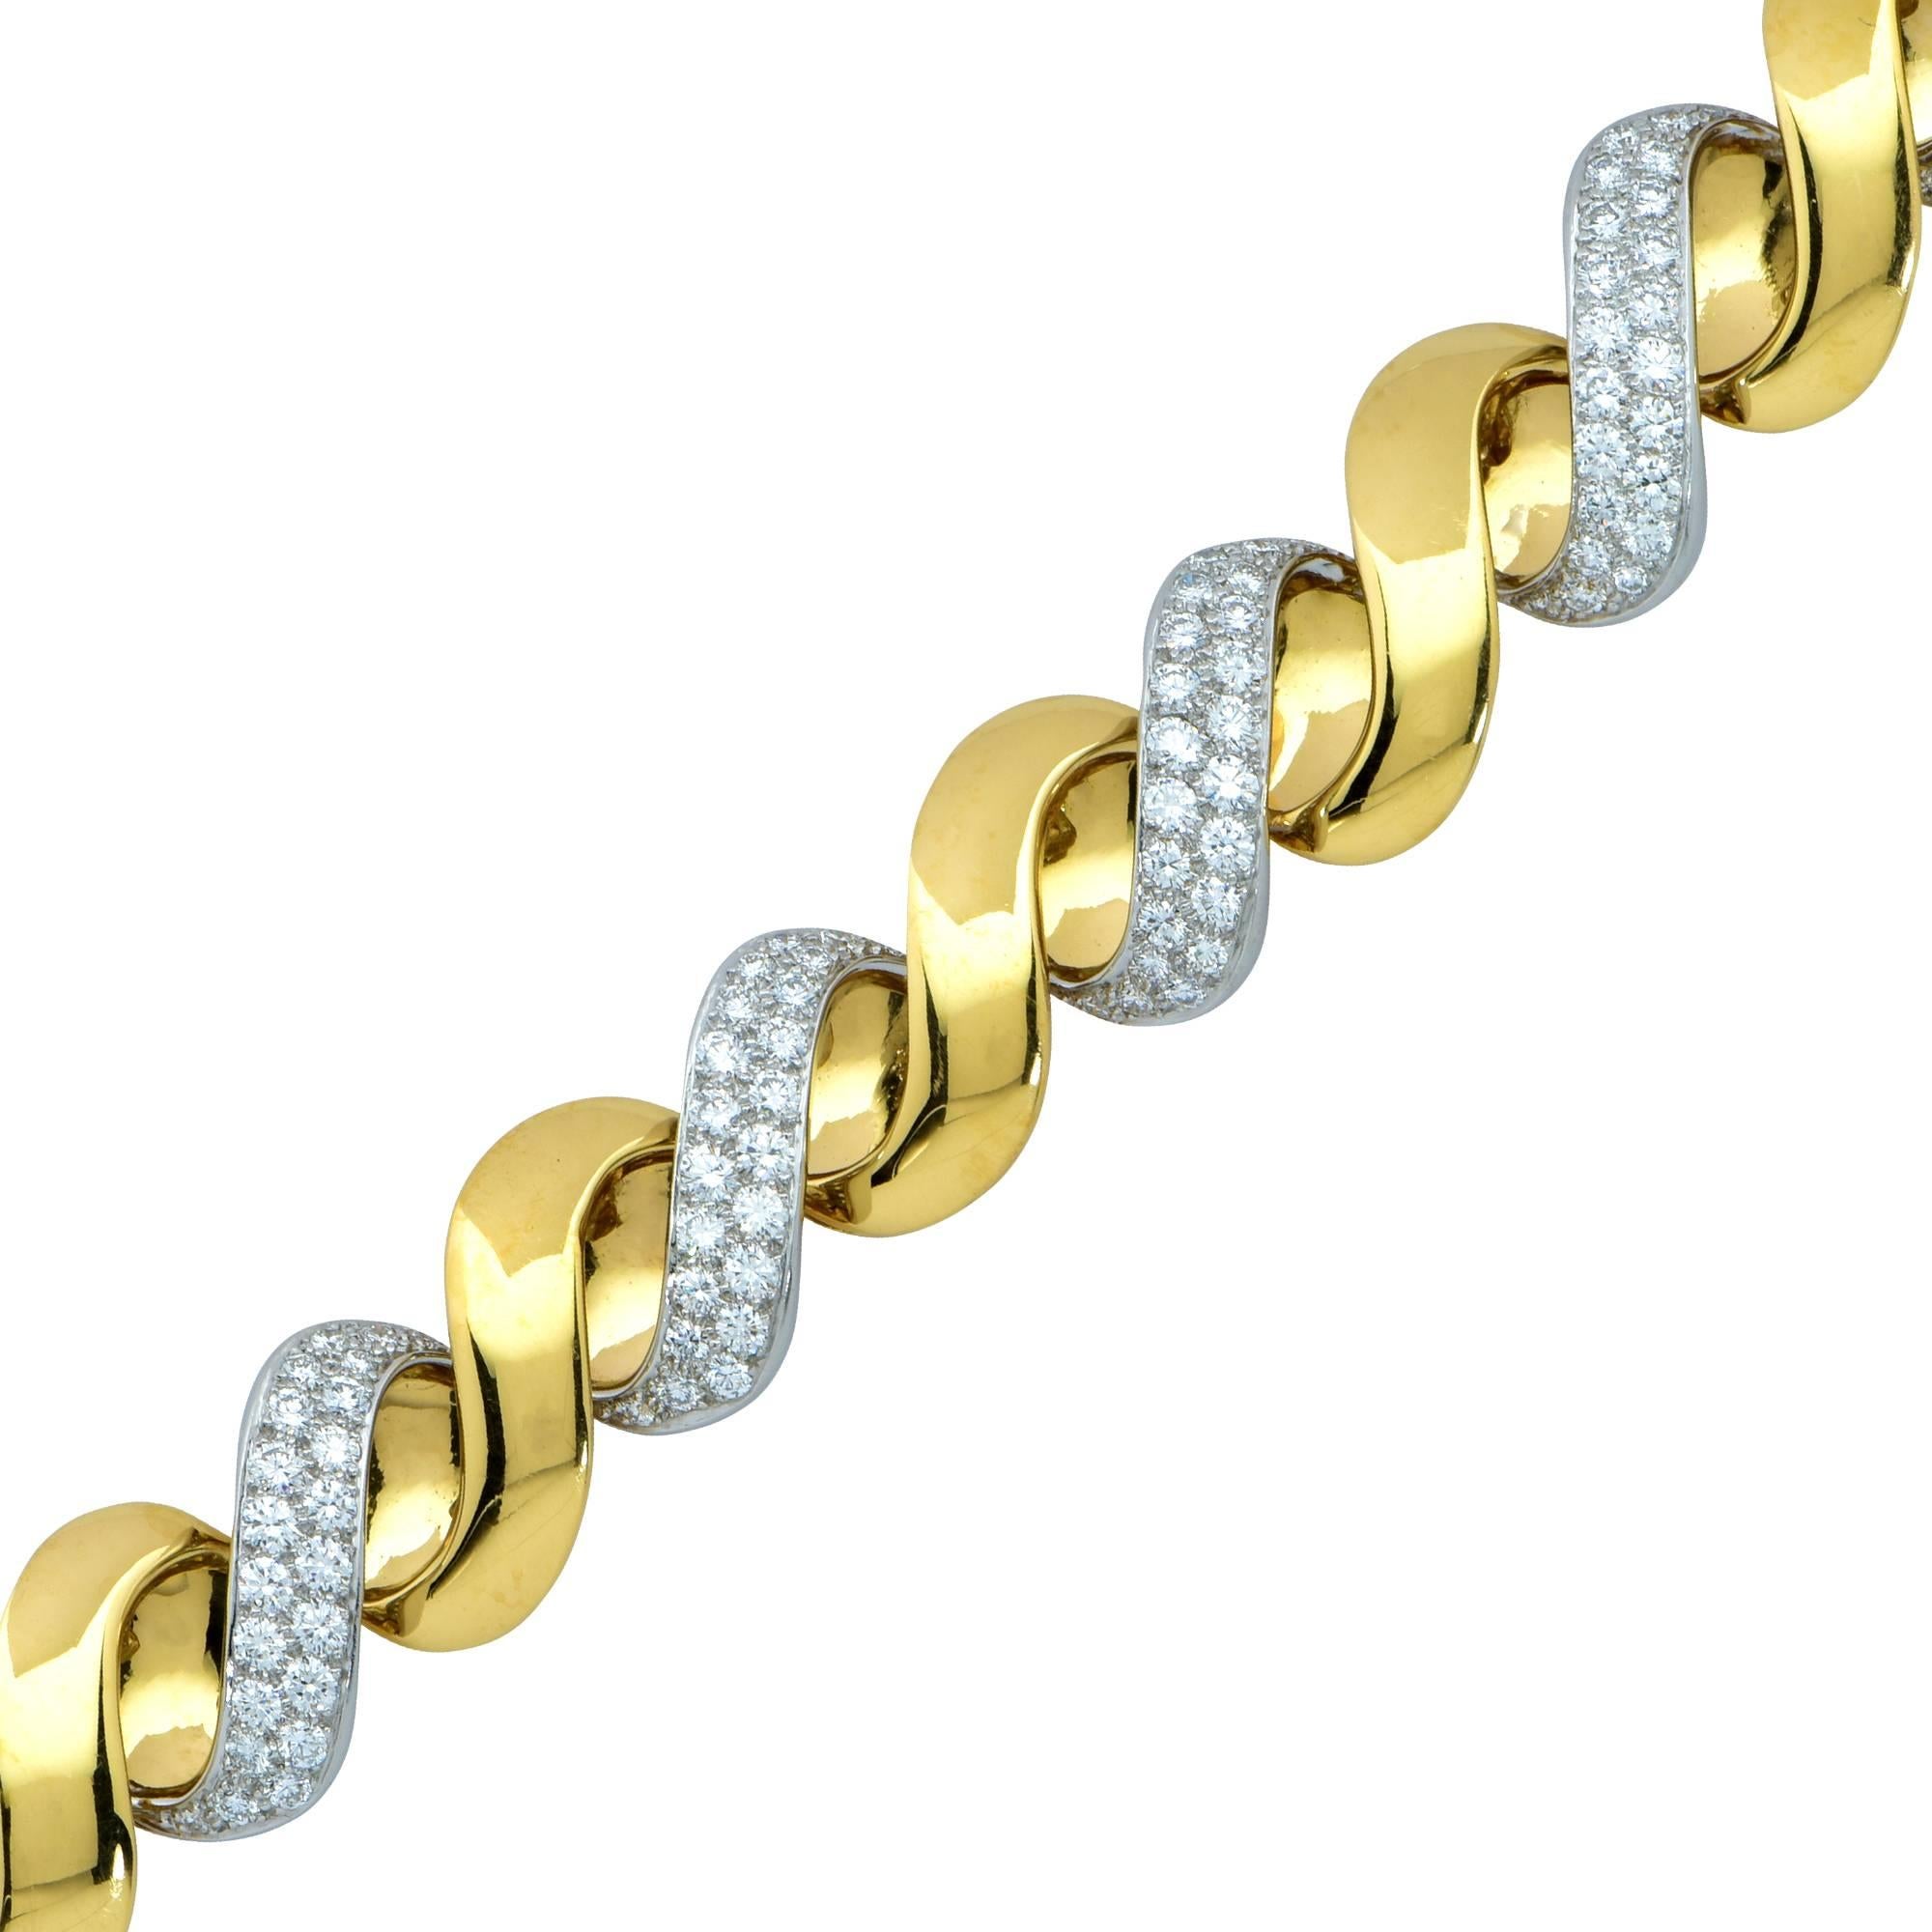 Modern Oscar Heyman 18 Karat Yellow Gold and Diamond Bracelet